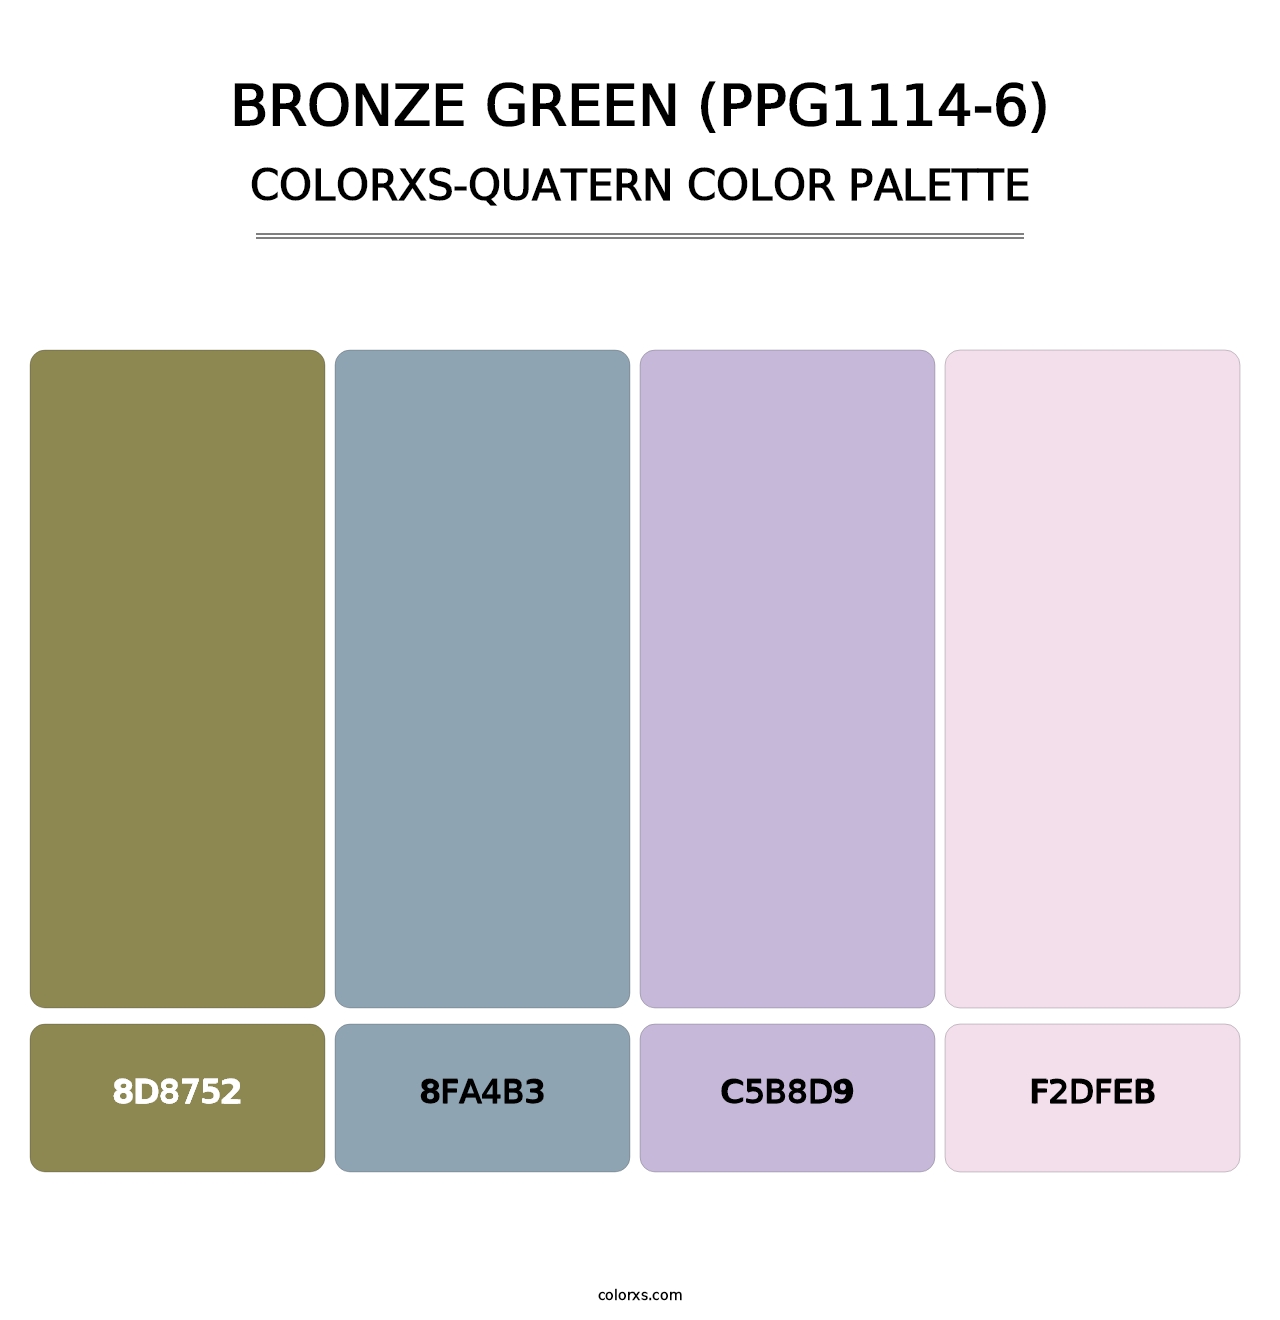 Bronze Green (PPG1114-6) - Colorxs Quatern Palette